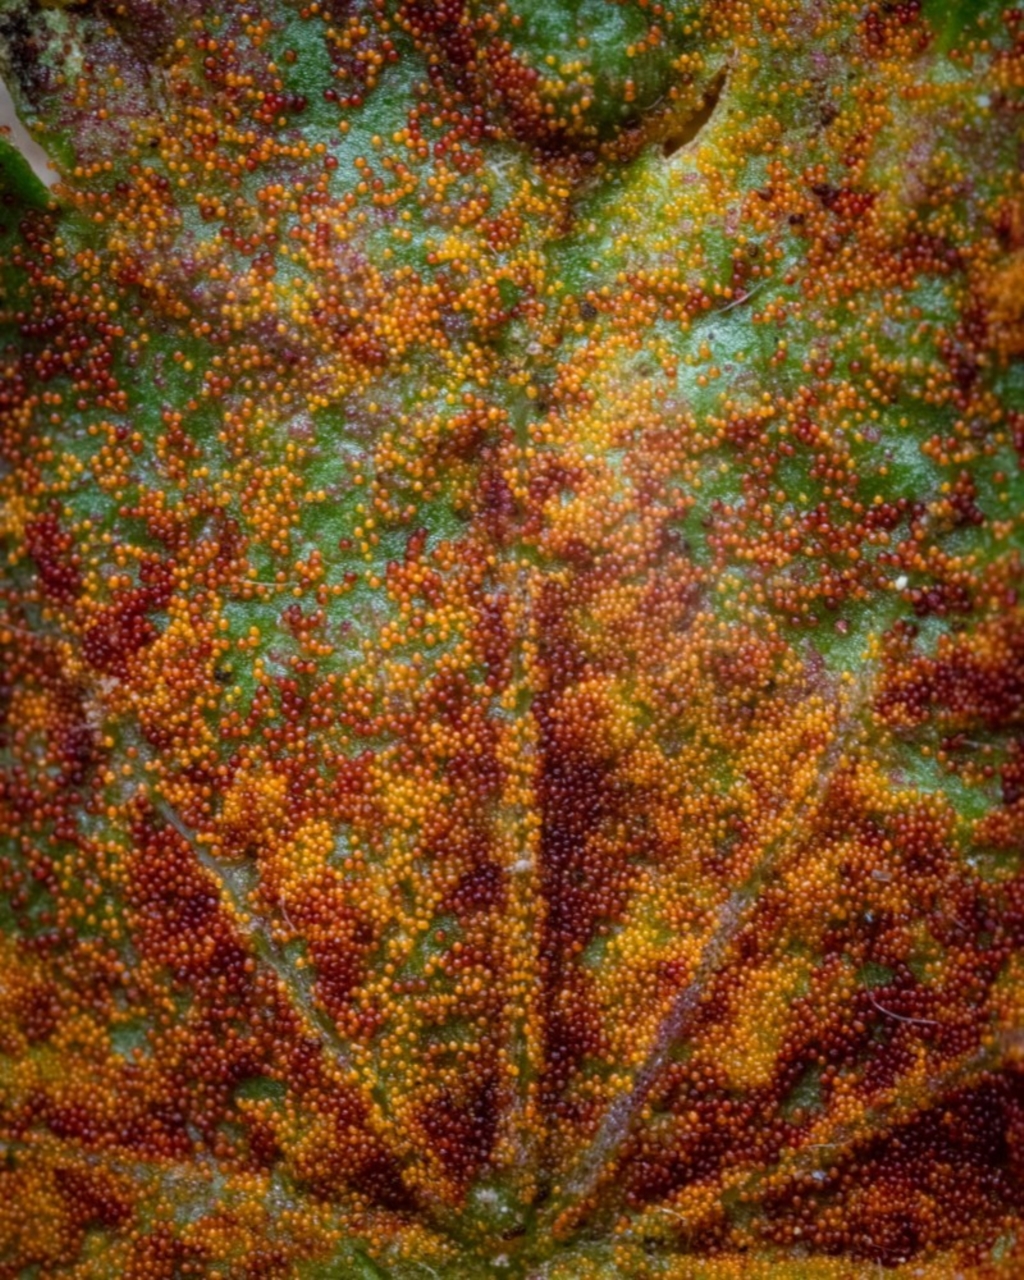 zz rusts, leaf spots, at suppressed - 16 Nov 2020